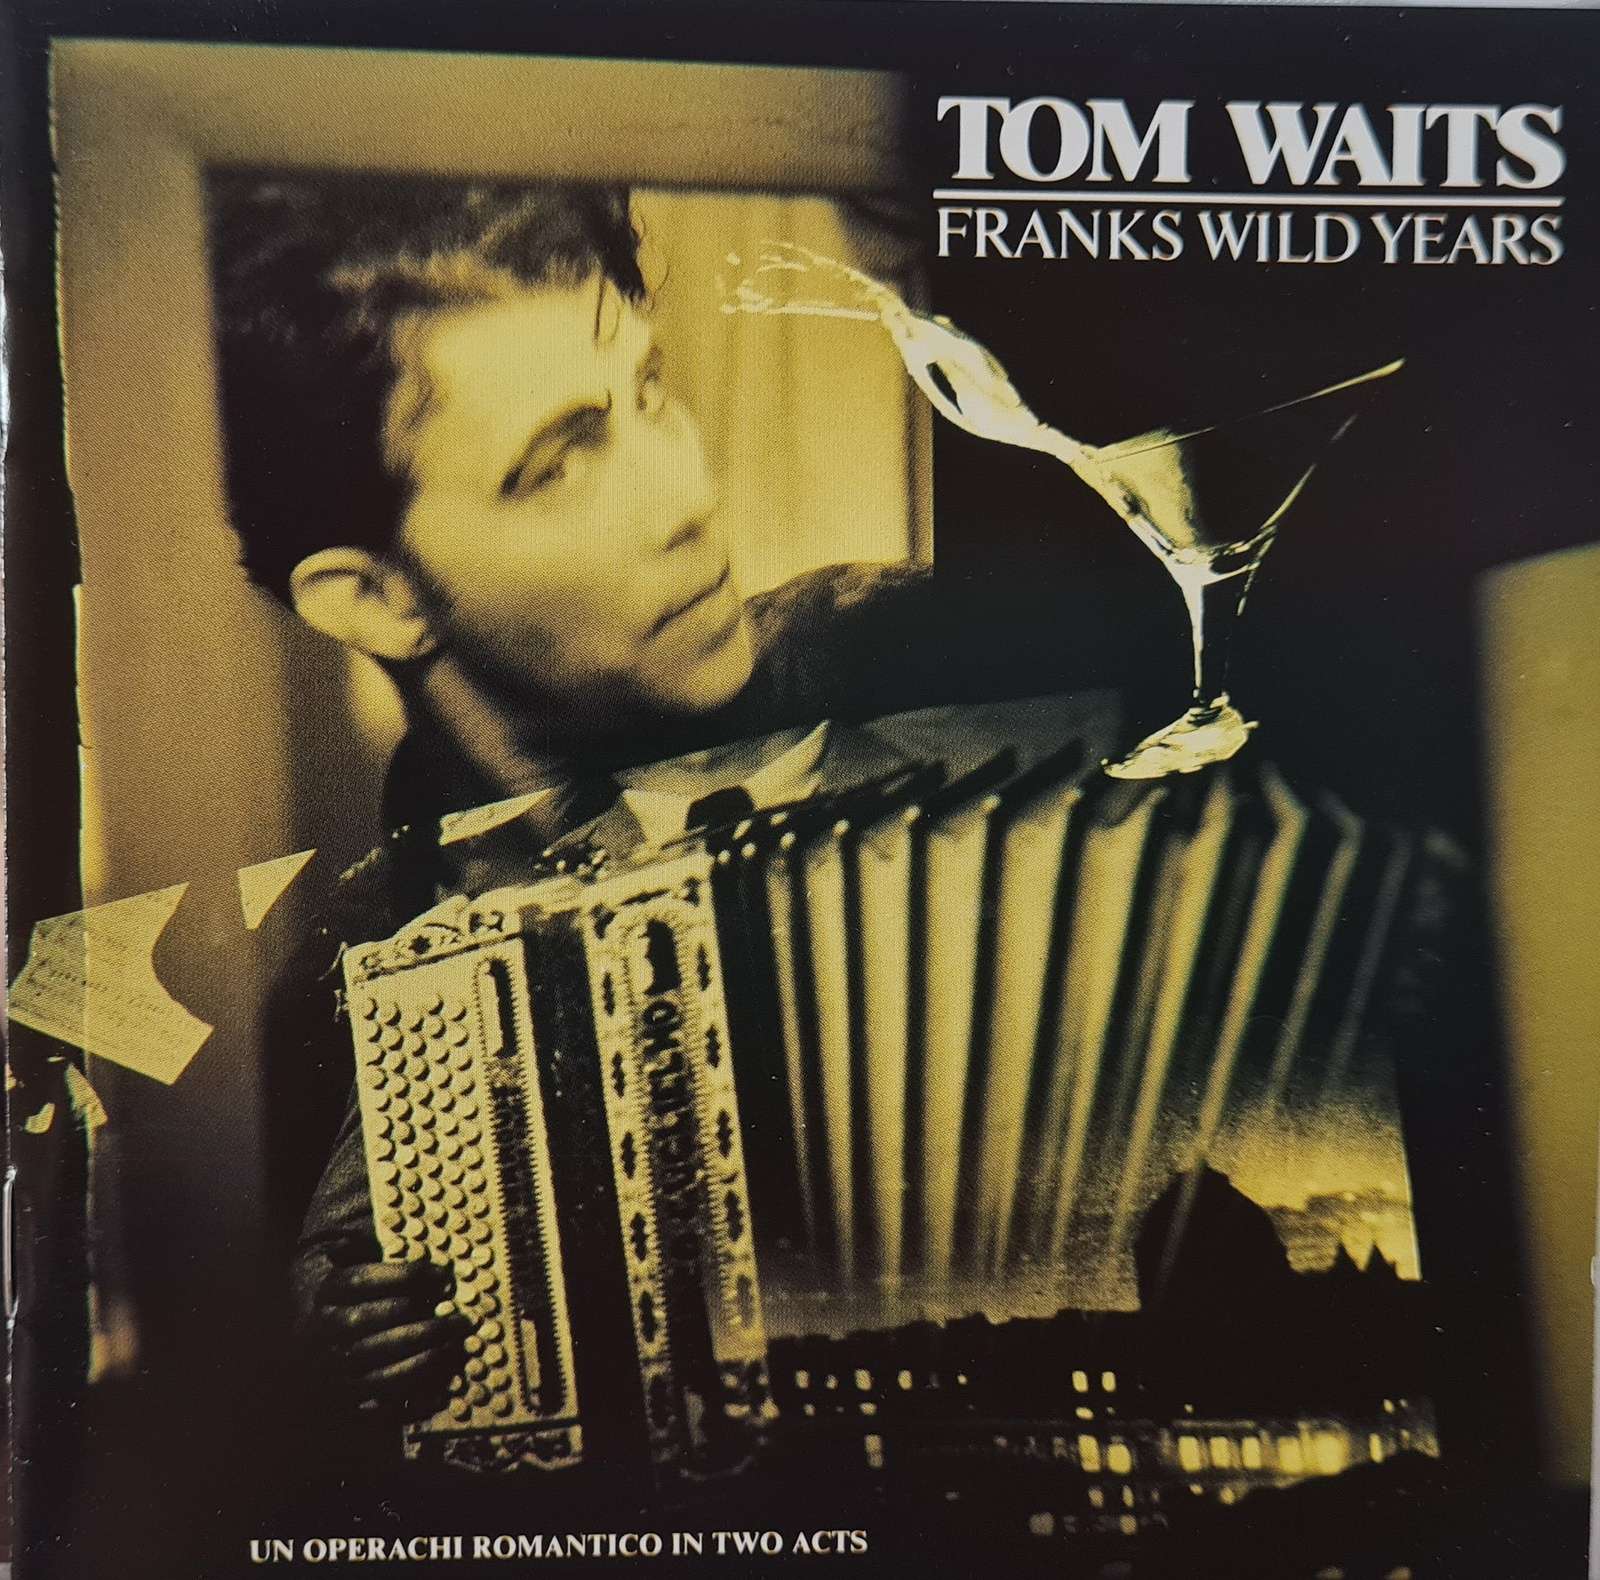 Tom Waits - Franks Wild Years (CD)